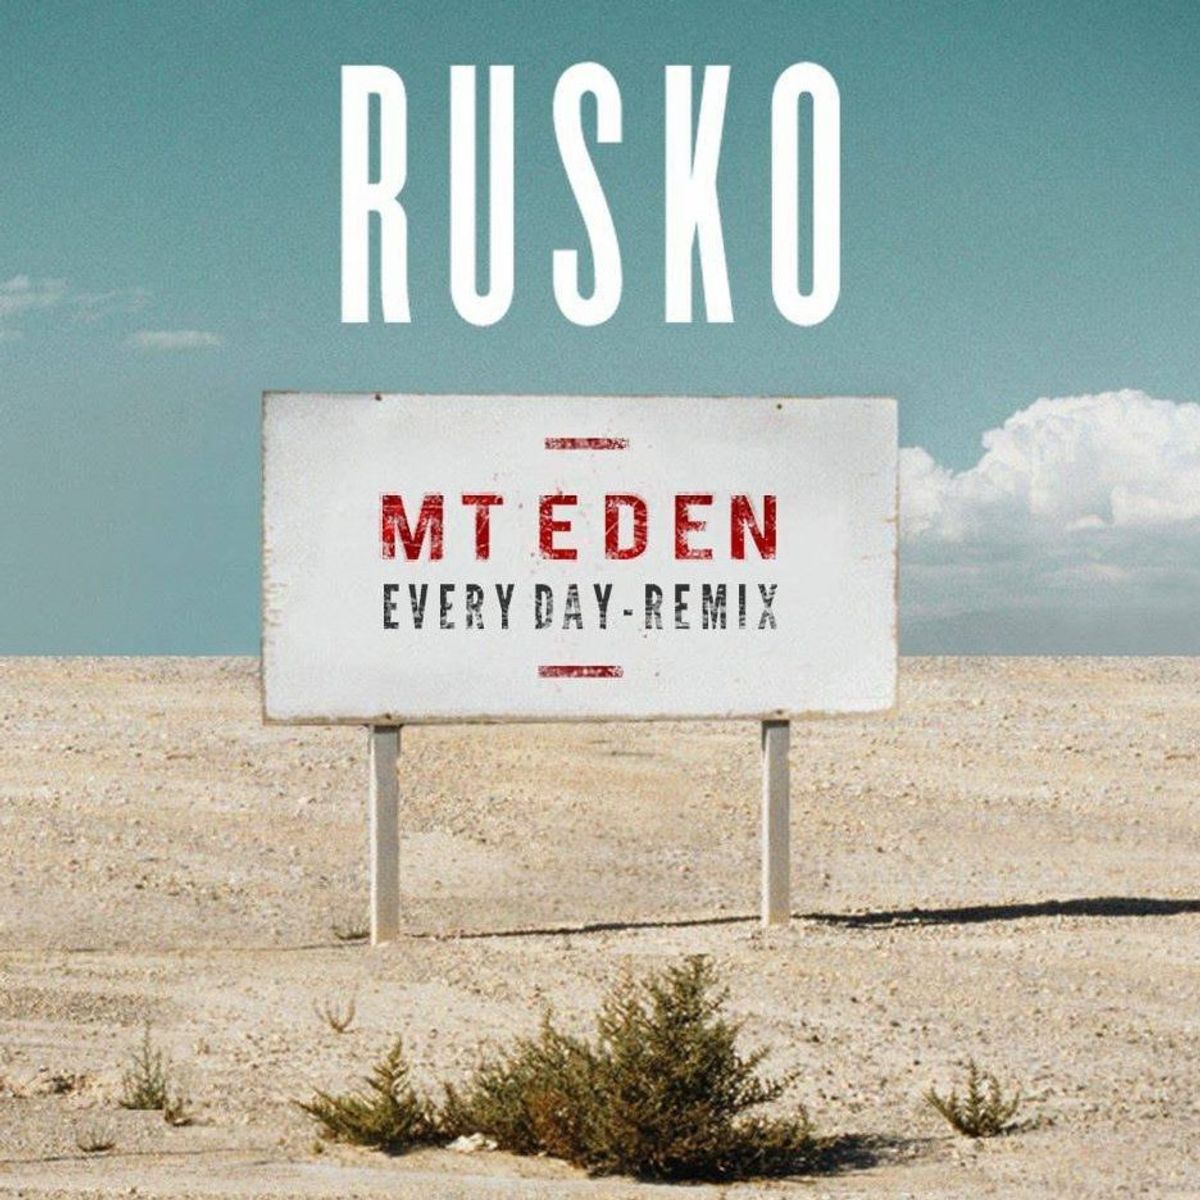 Free Download: Mt.EDEN Flip Rusko's "Everyday" With New Remix